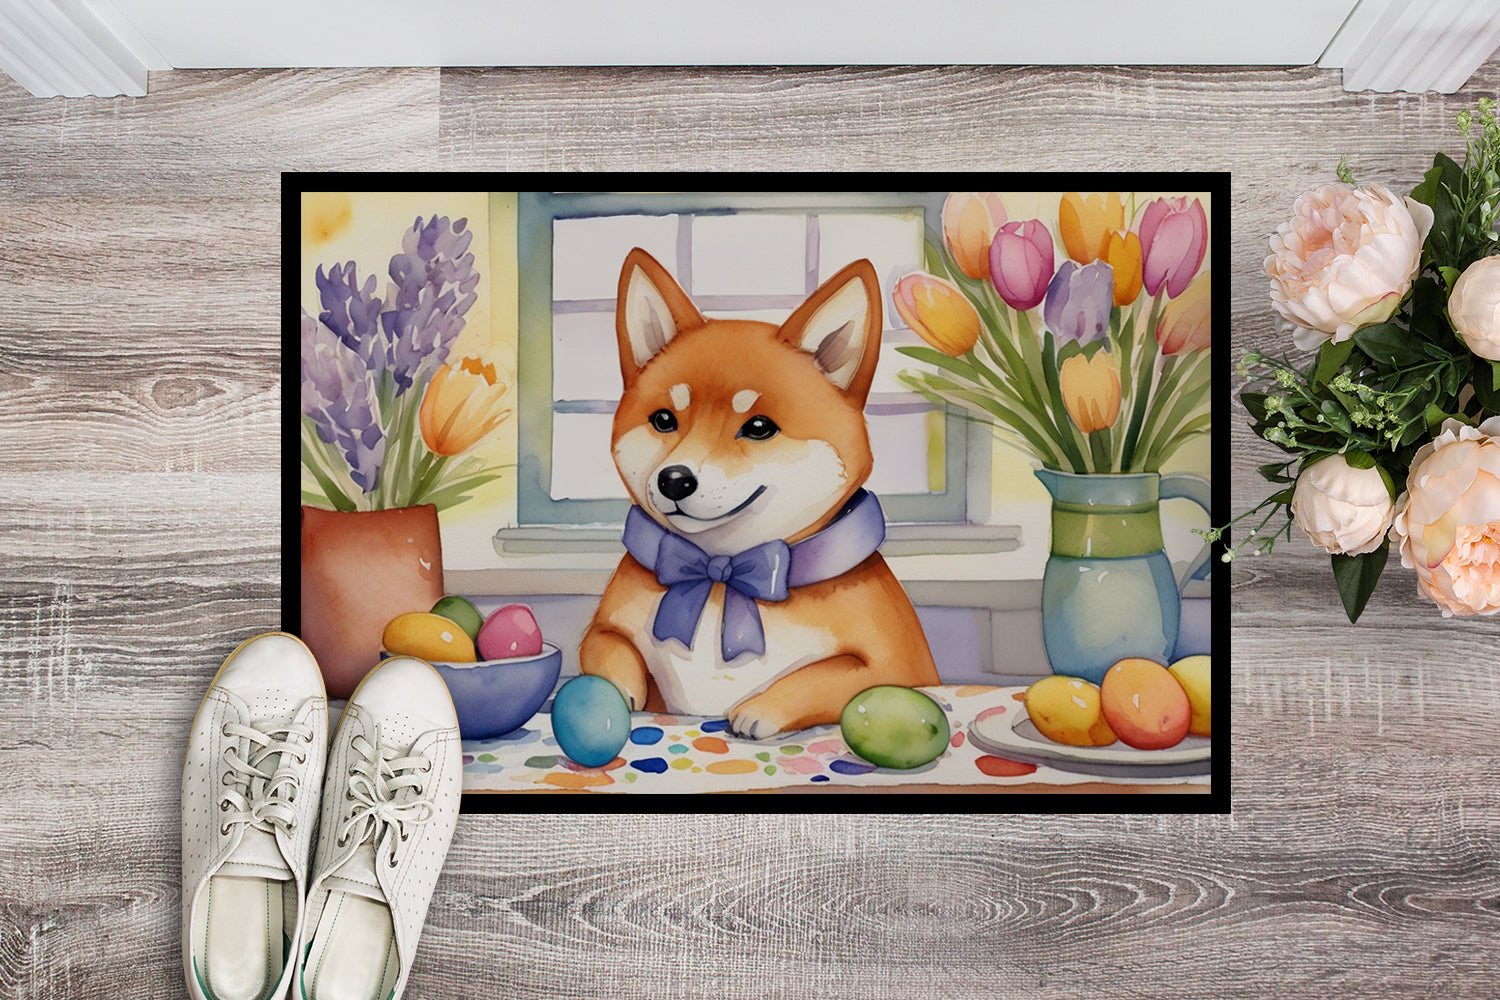 Buy this Decorating Easter Shiba Inu Doormat